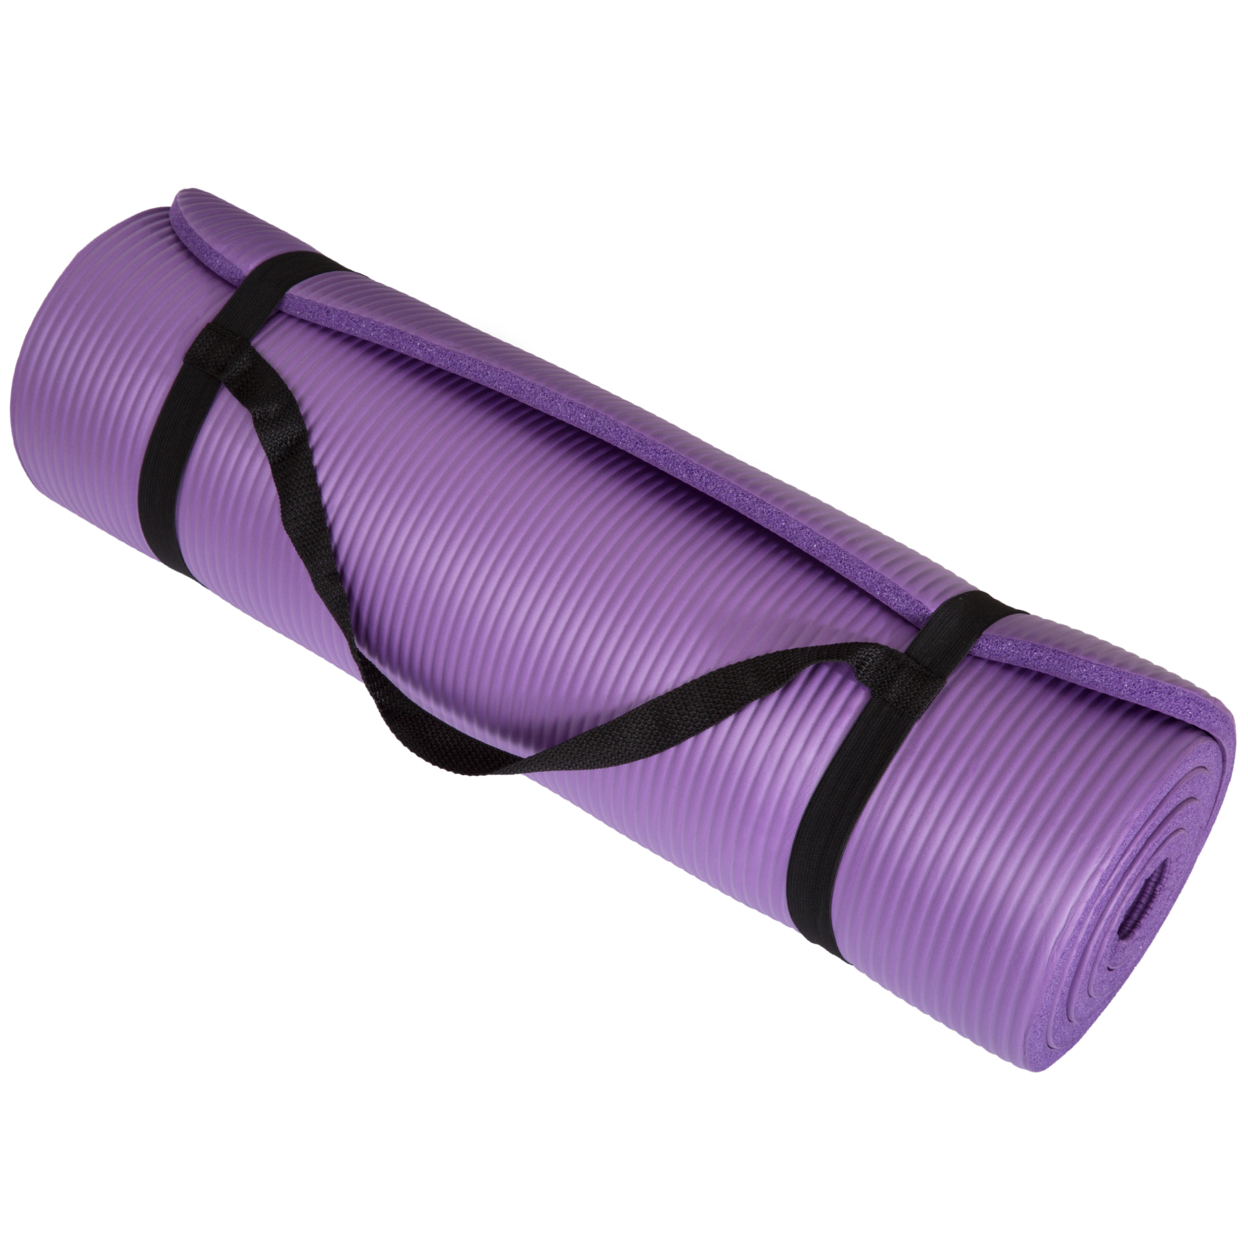 Camping Sleeping Yoga Mat Thick .50 Half Inch Padding Foam Travel Purple 71 X 24